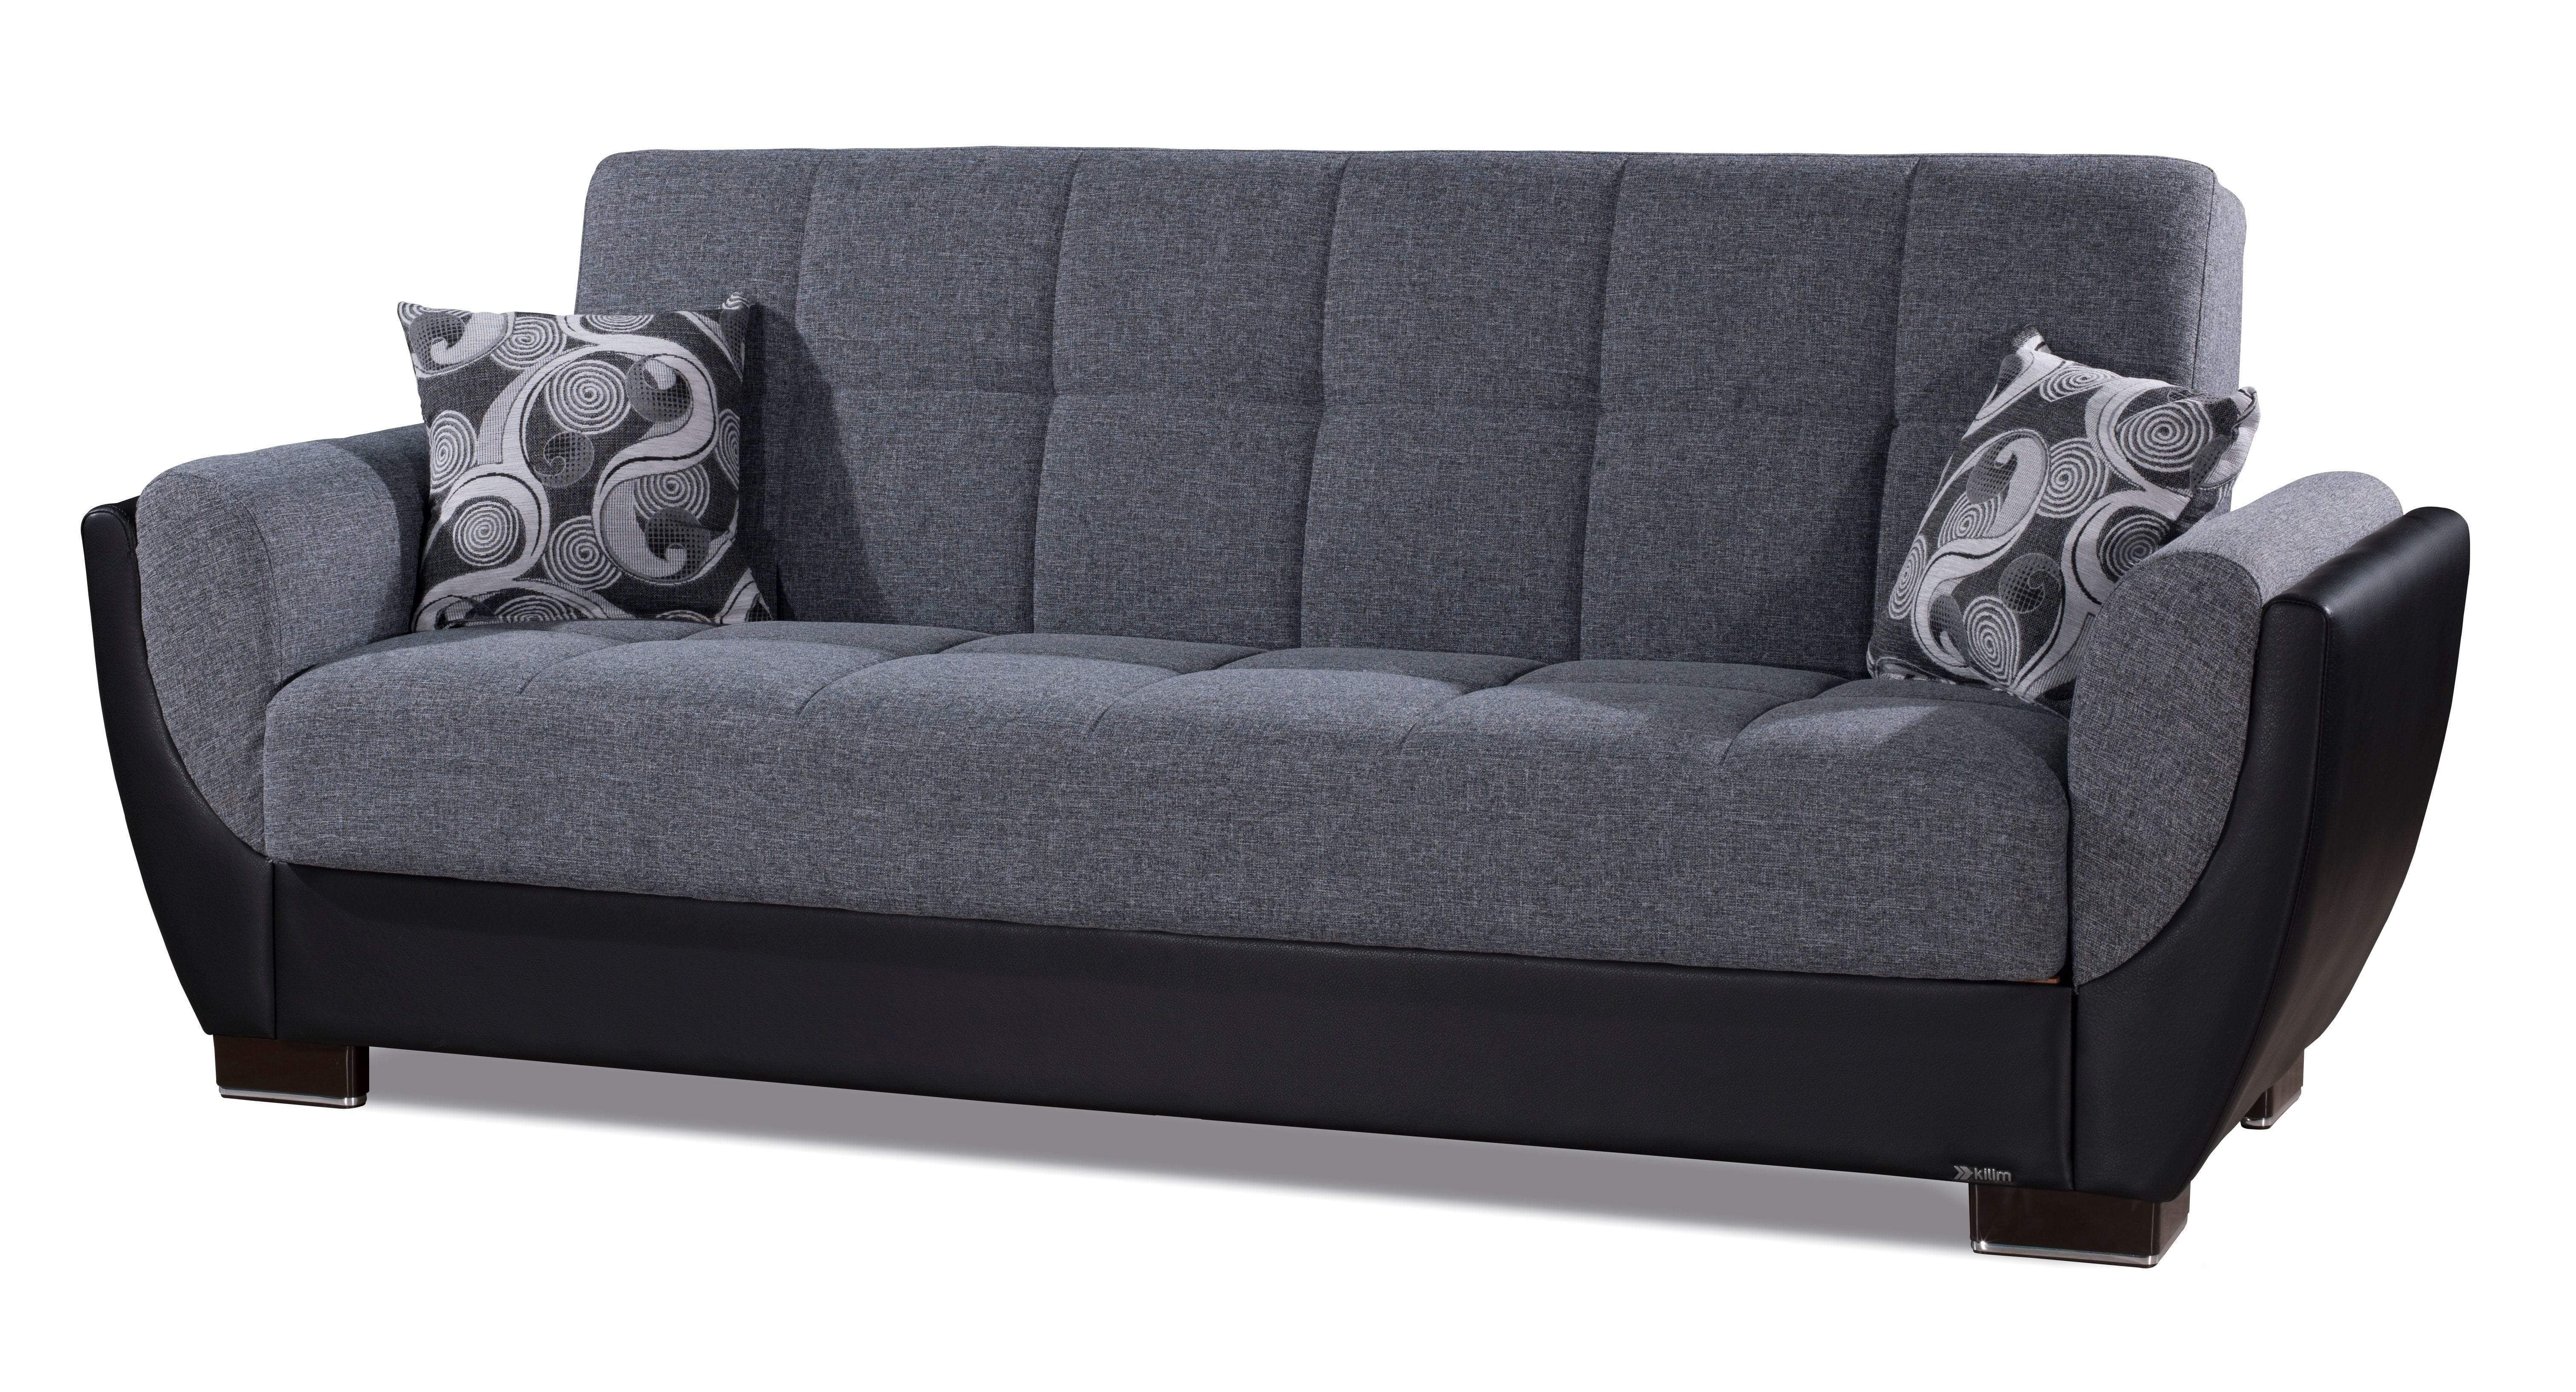 Sleeper Sofa With Storage, European Firm Convertible Sofa Bed - Walmart